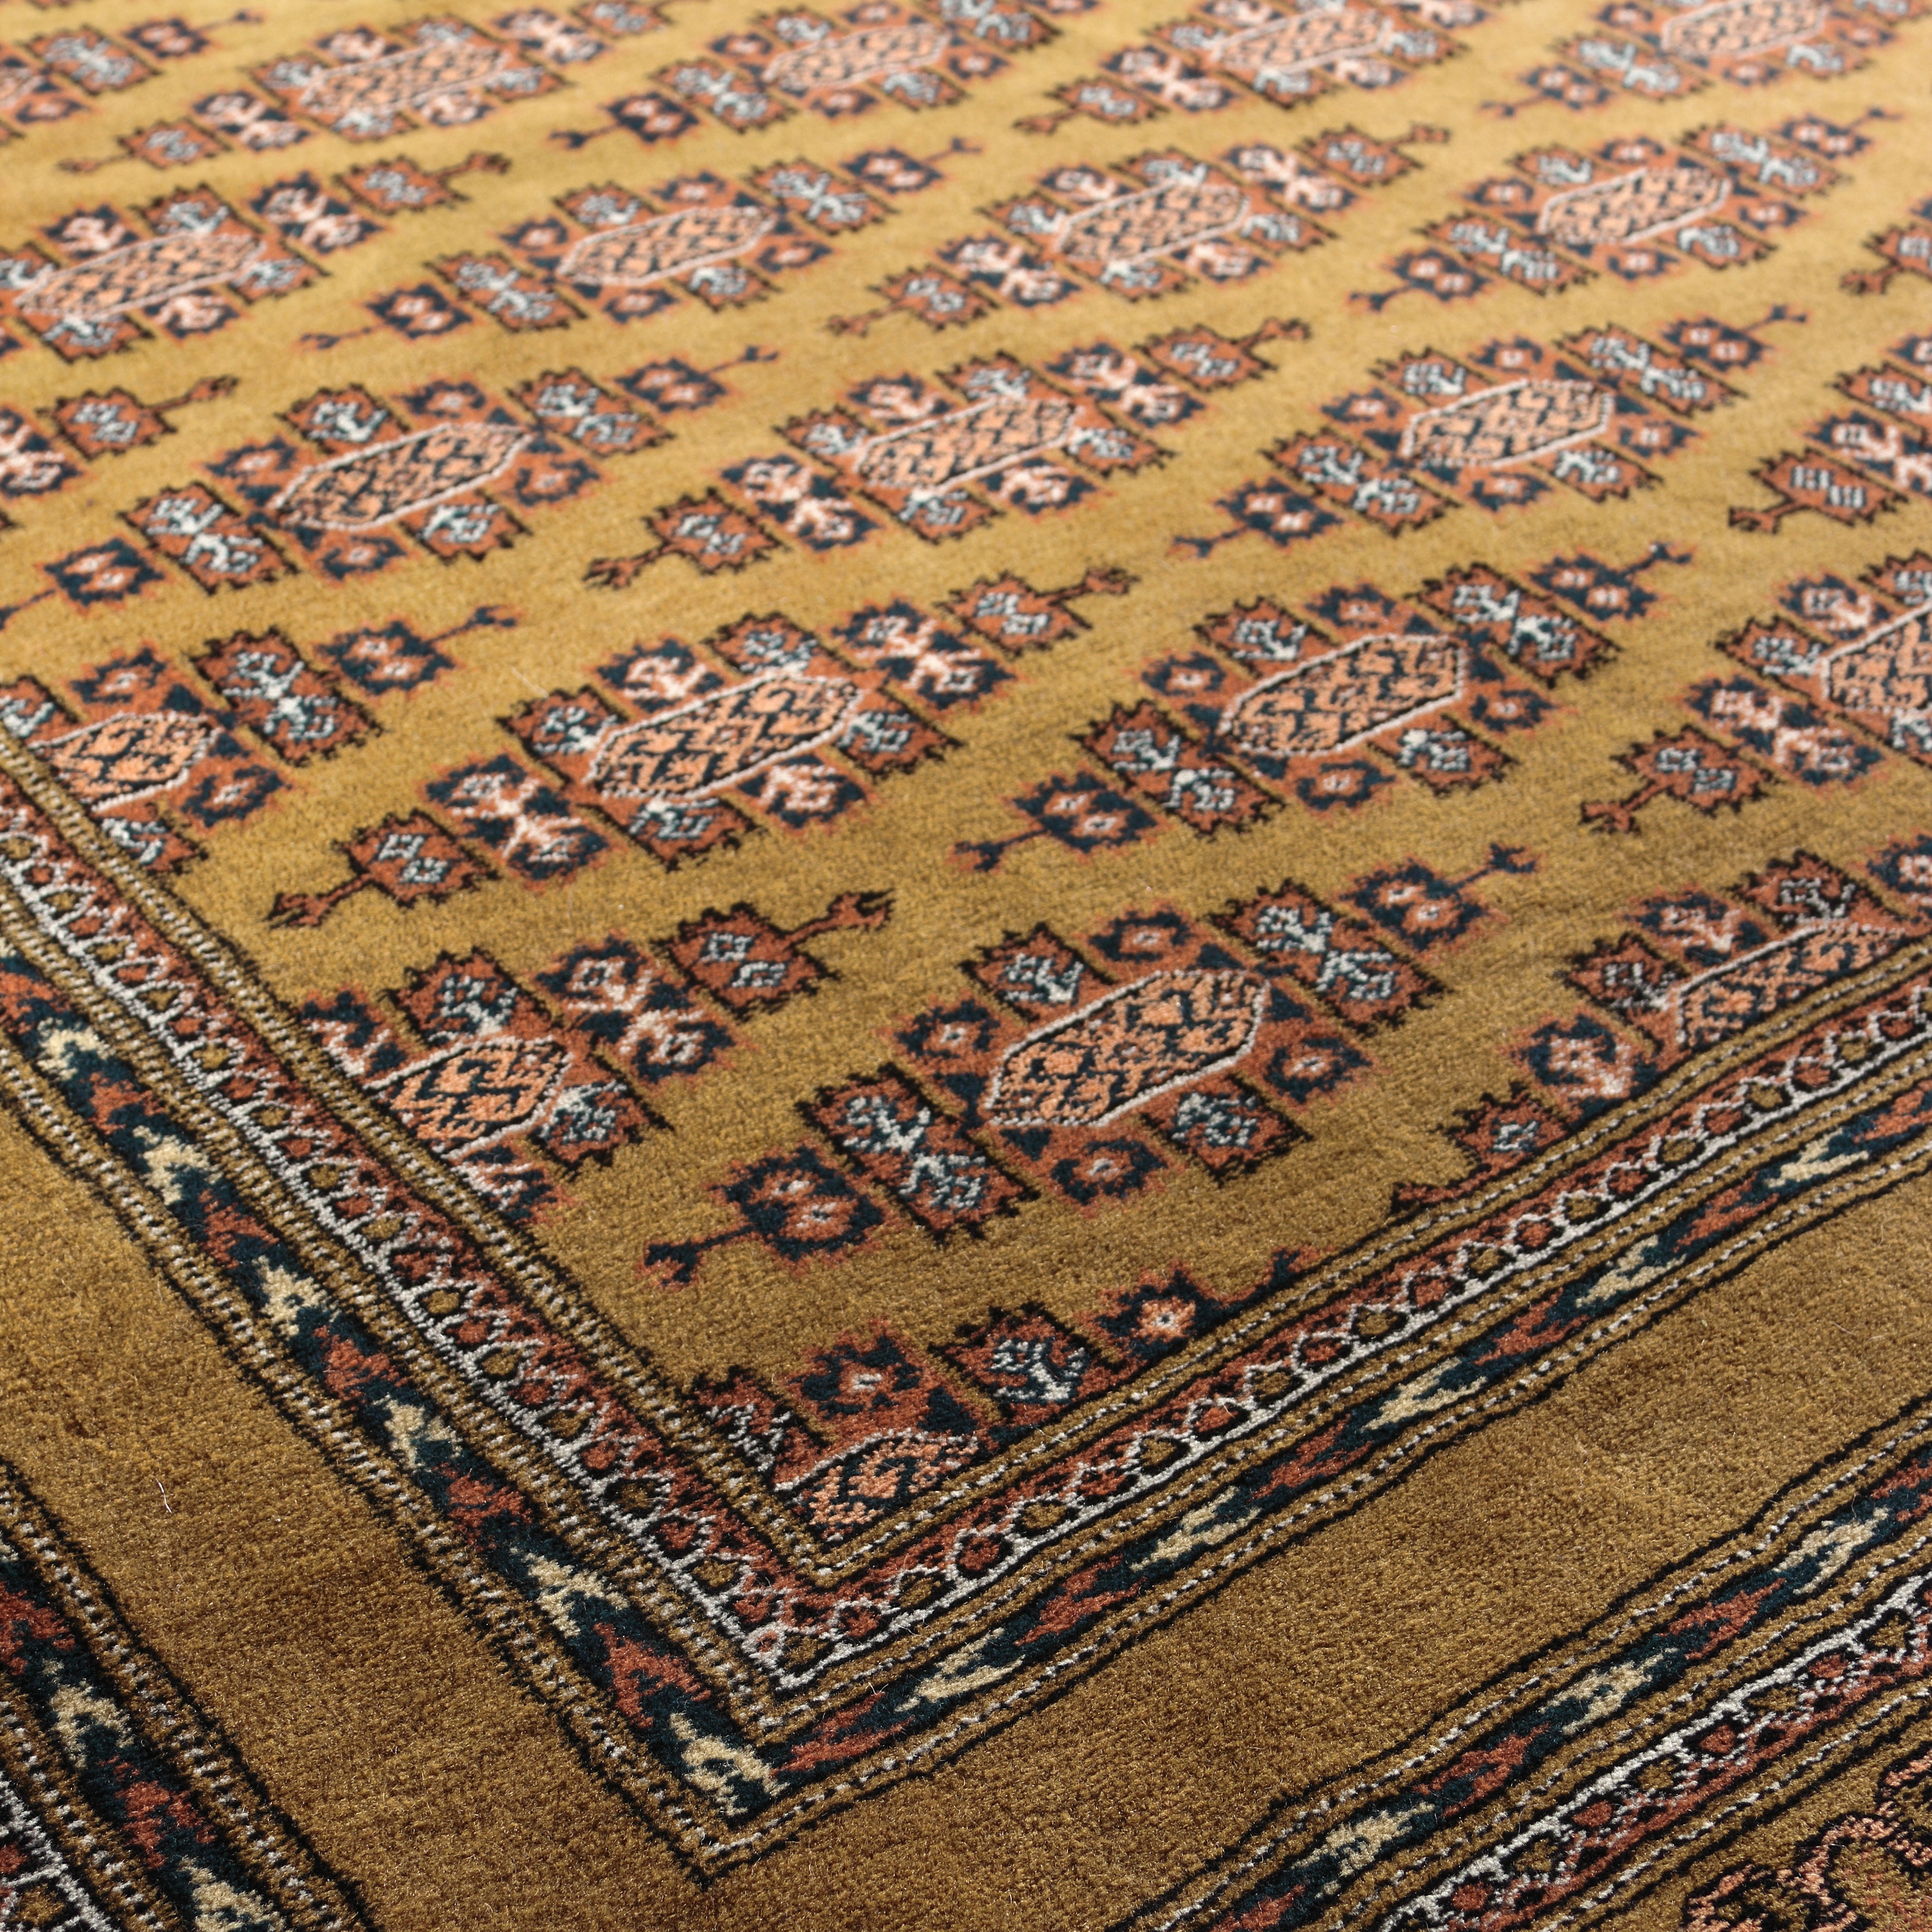 Turkmen carpet